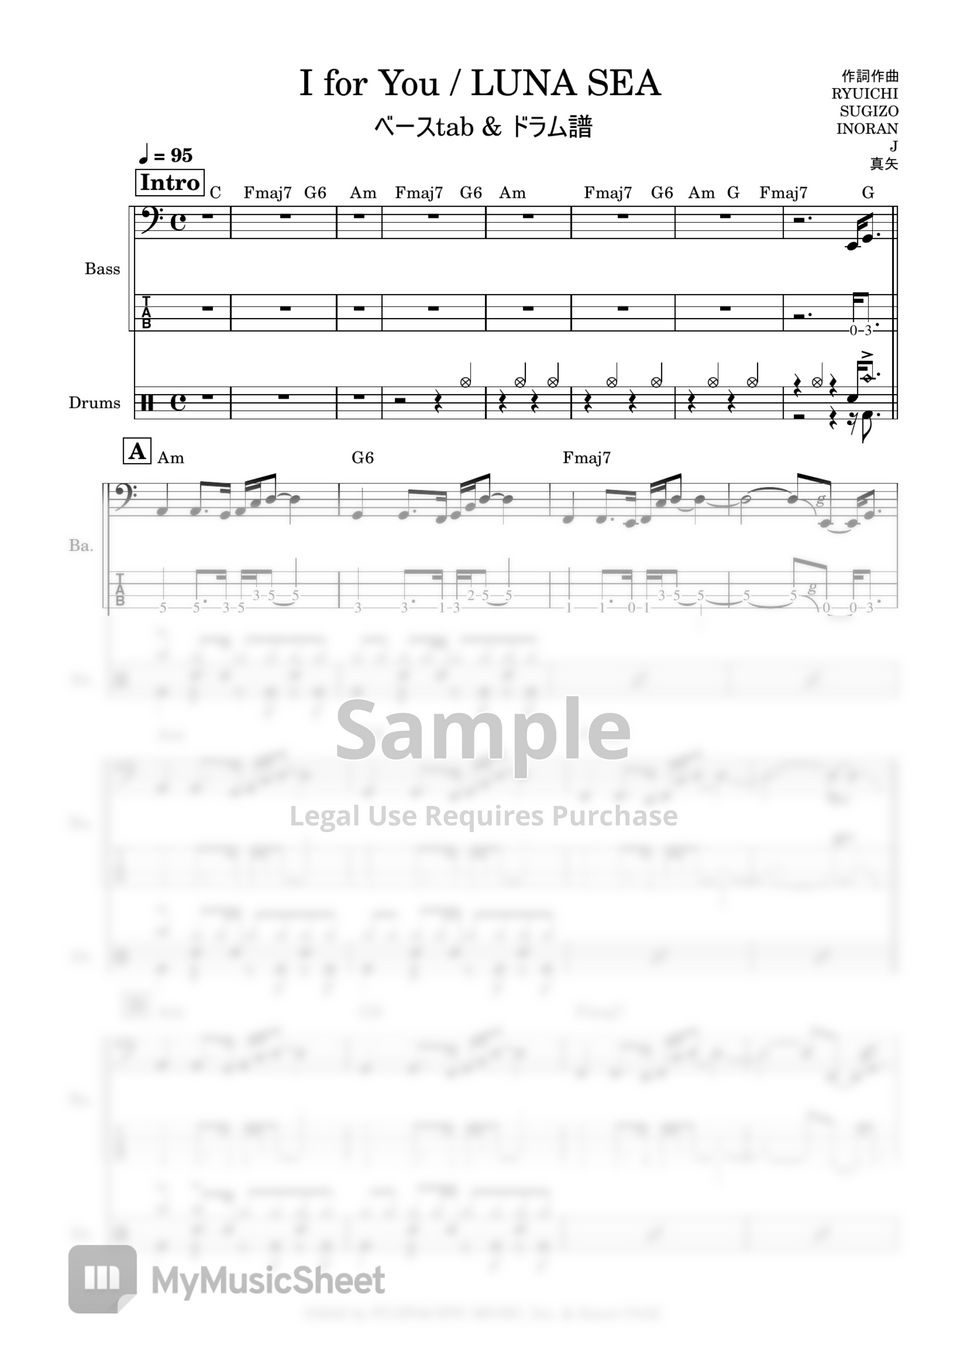 LUNA SEA - I for You (Bass tab & Drums Score + midi) by Kensaku Suzuki